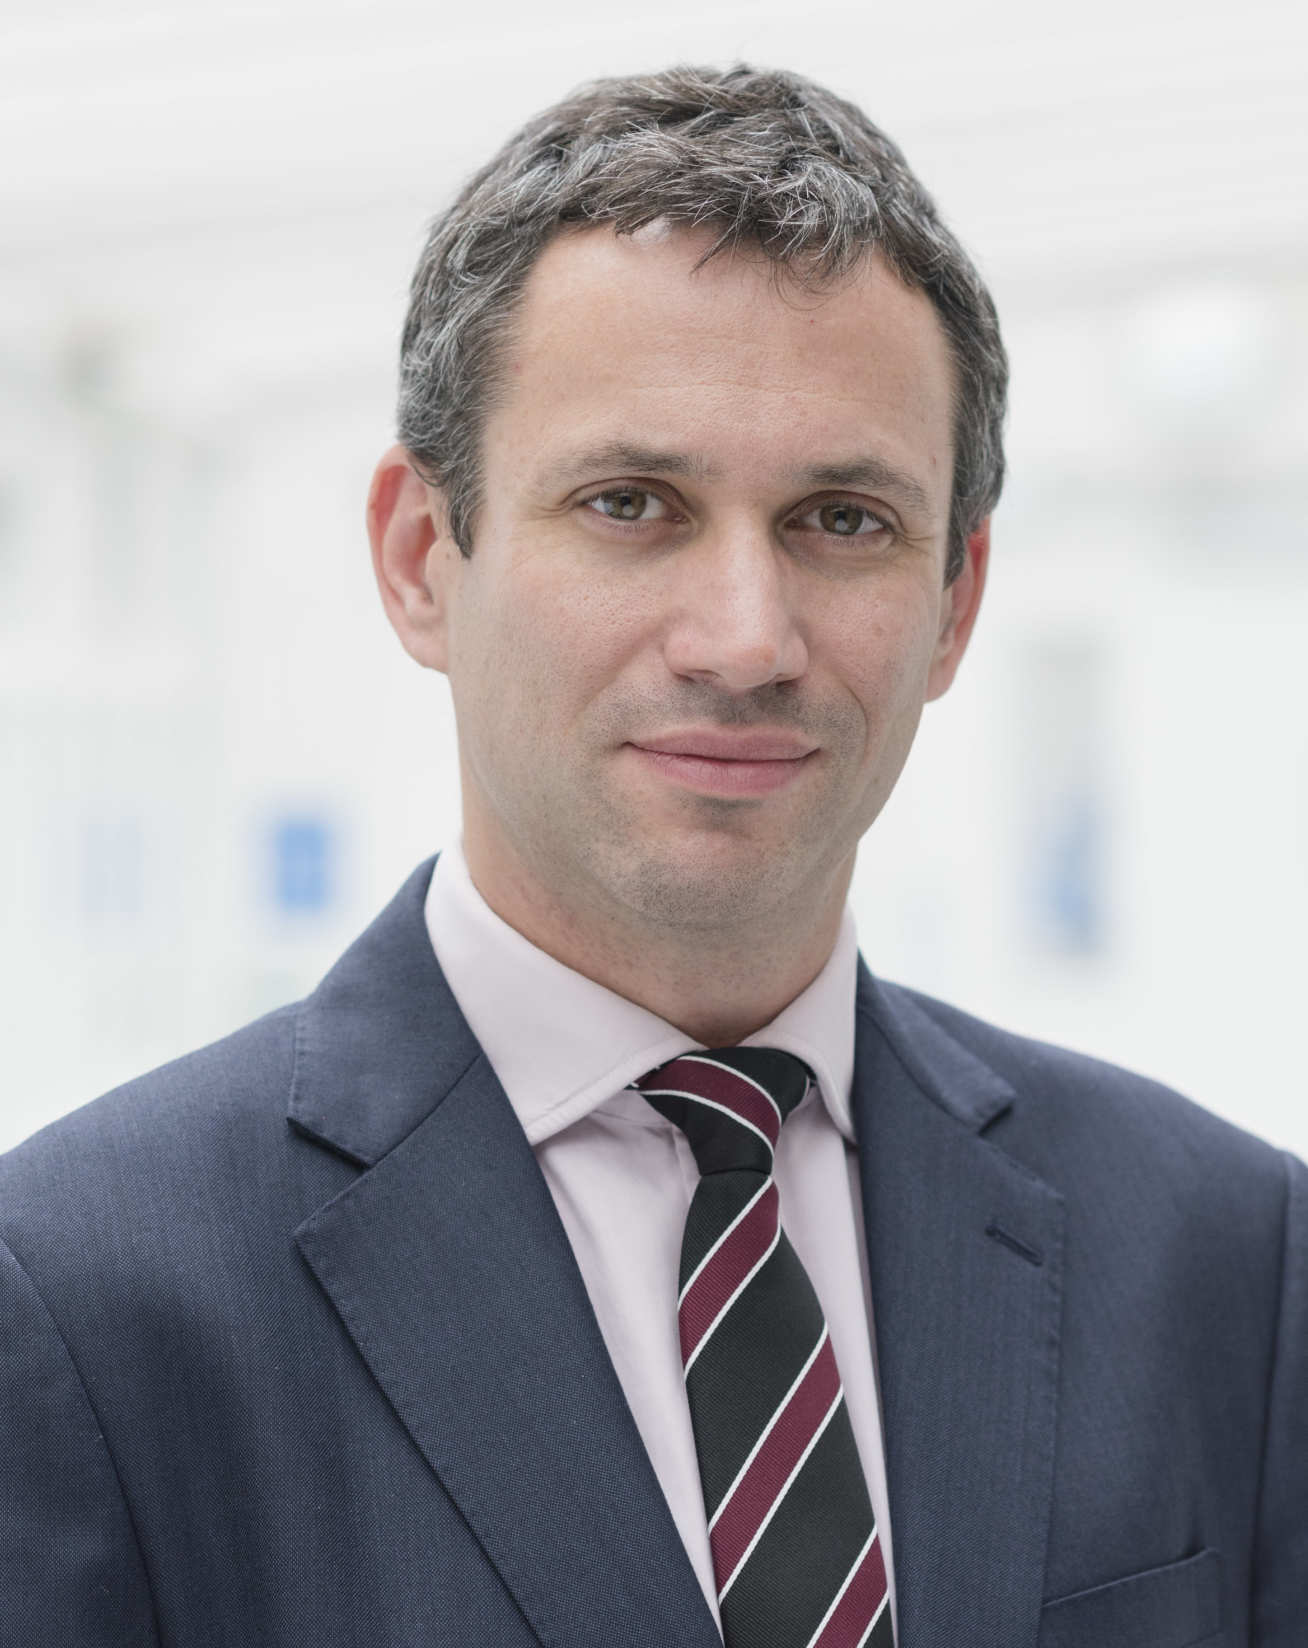 Professor Michael Loebinger, Respiratory Consultant and Clinical Director of Laboratory Medicine at Royal Brompton Hospital